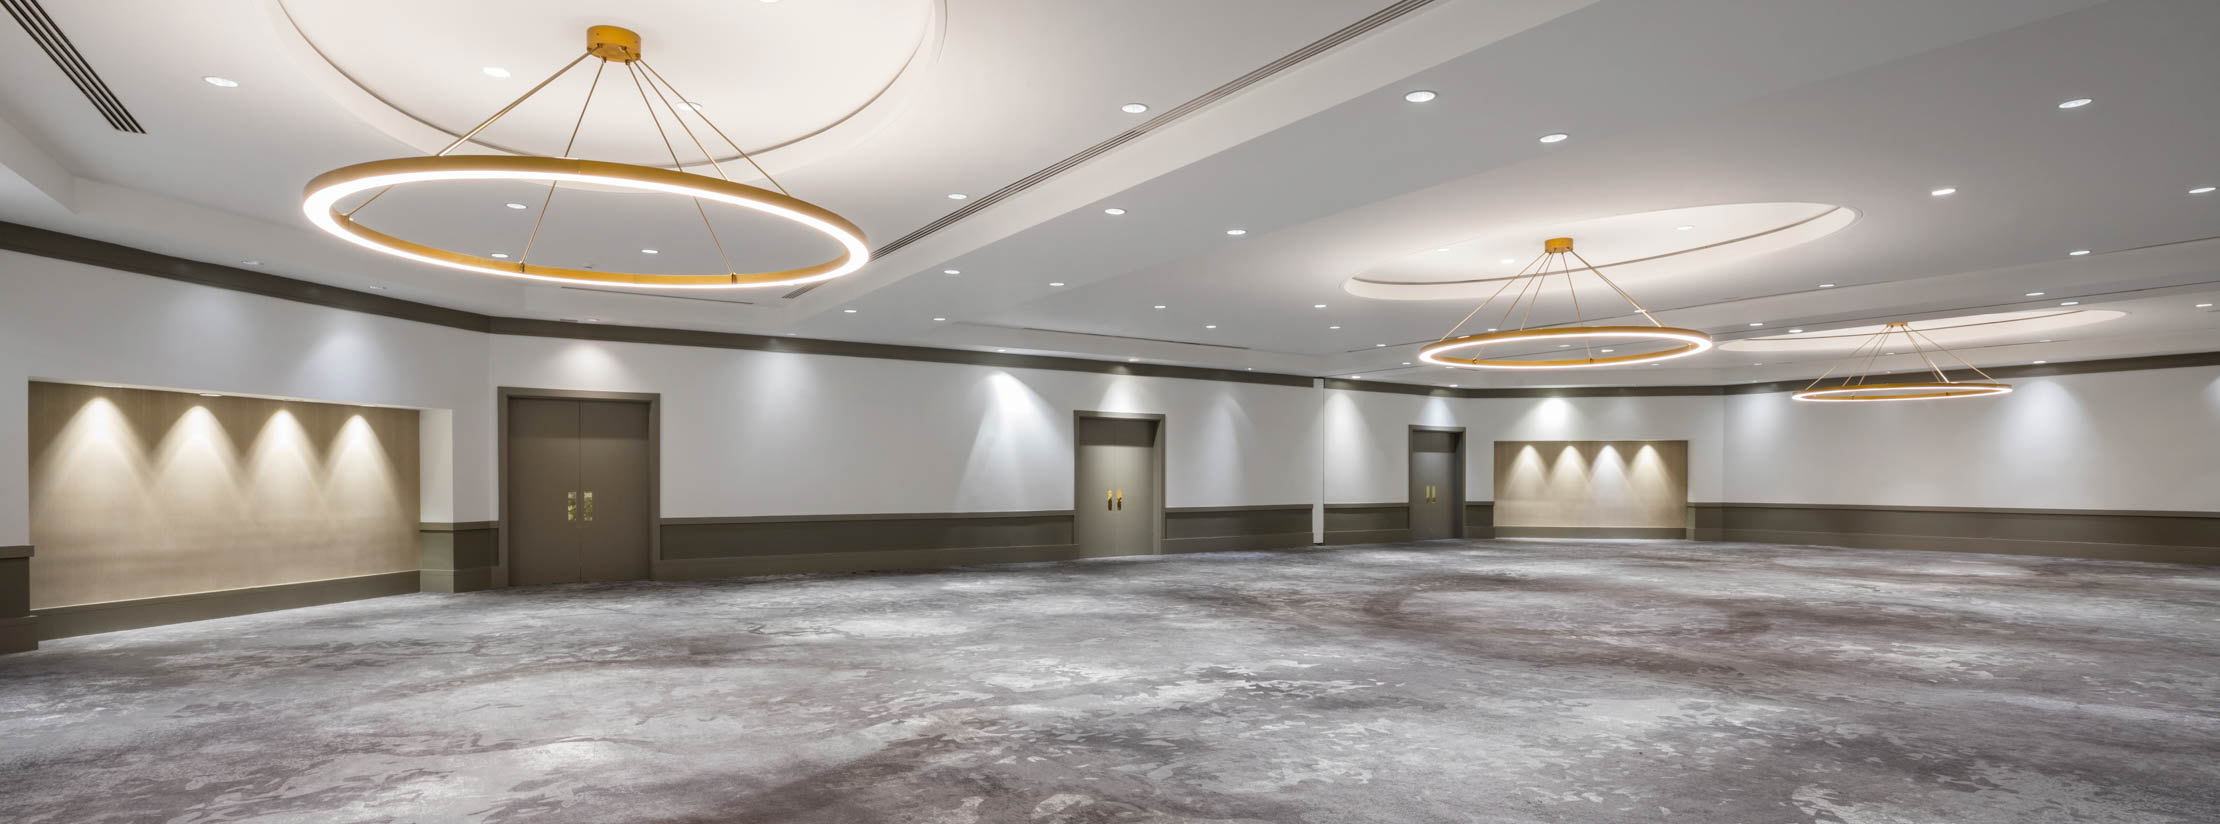 Empty Jordan ballroom with circular chandeliers and gray carpeted floor